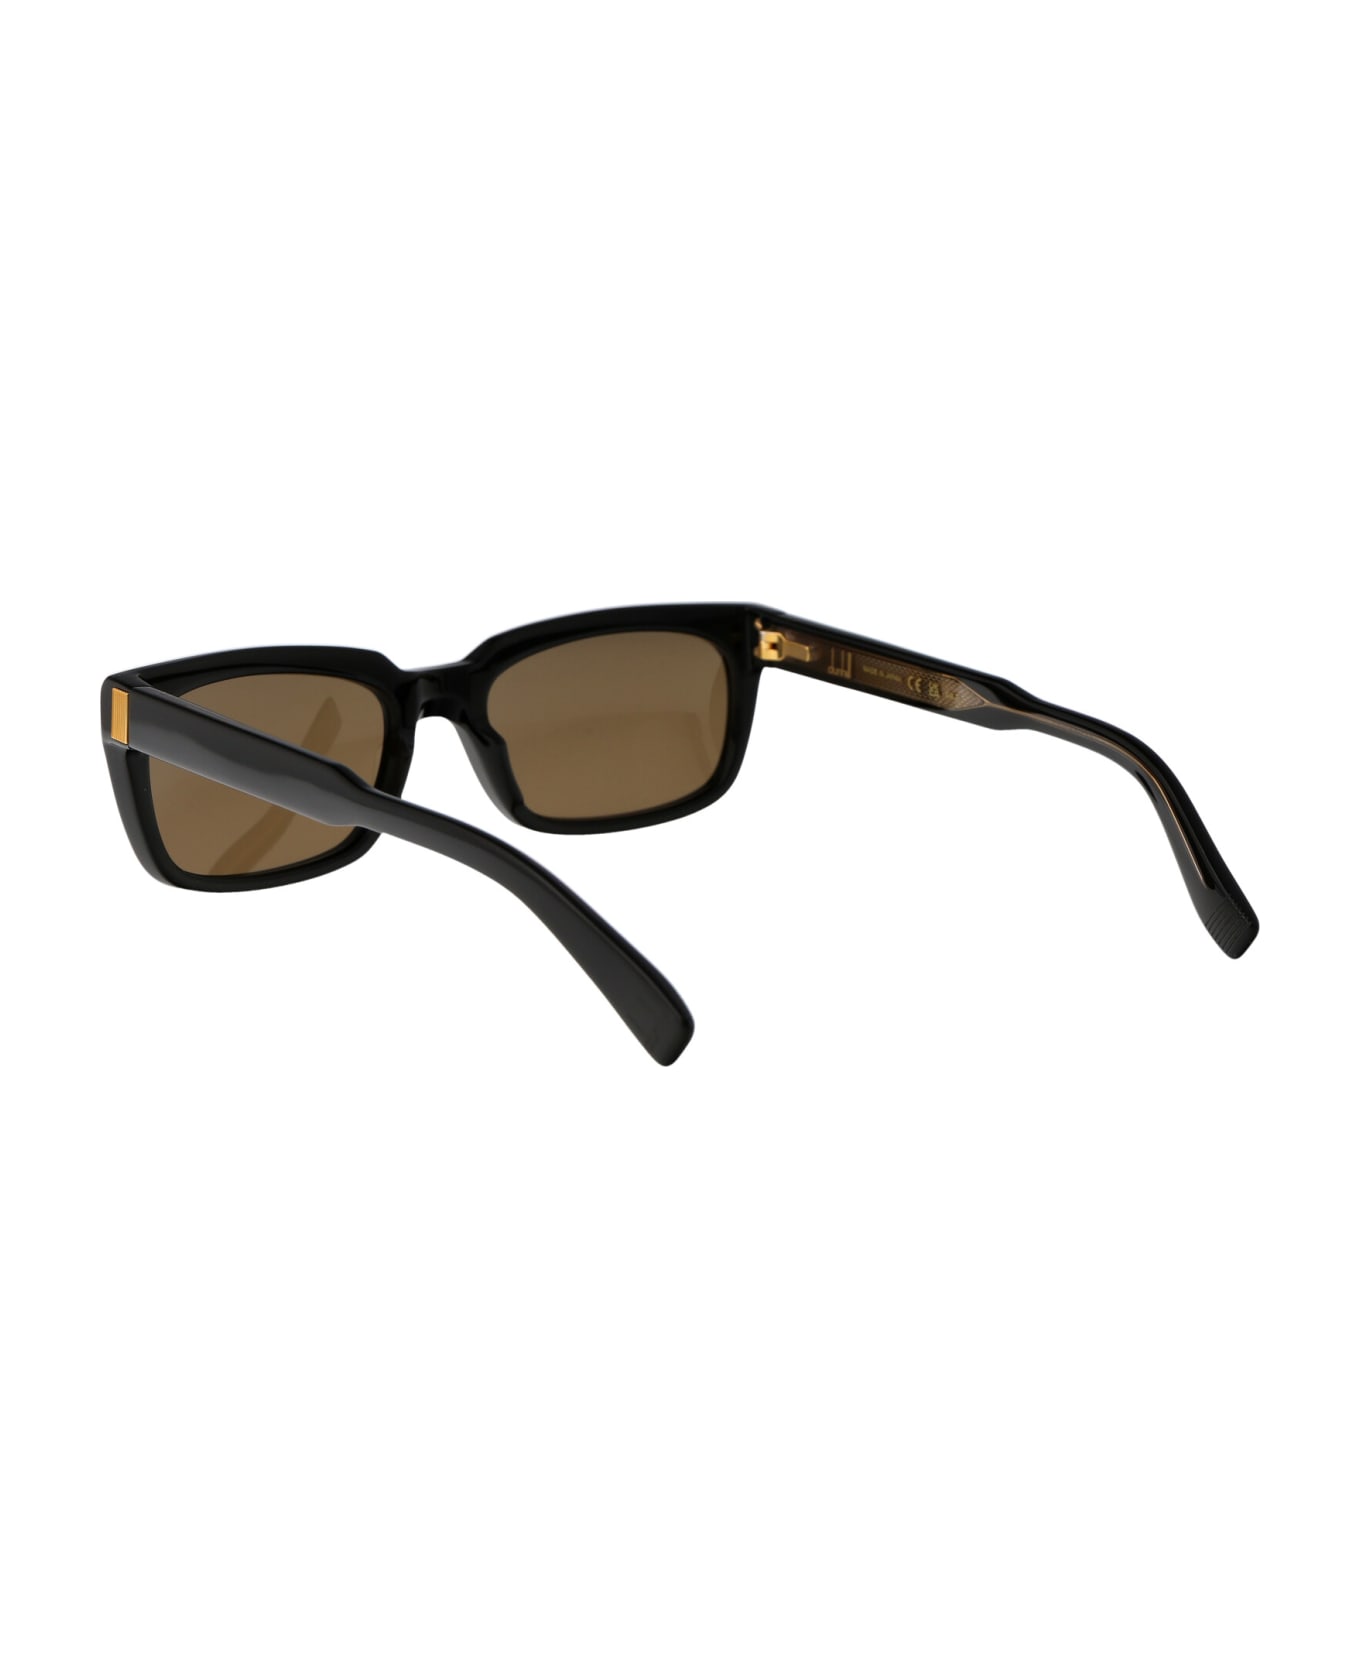 Dunhill Du0056s Sunglasses - 001 BLACK BLACK BROWN